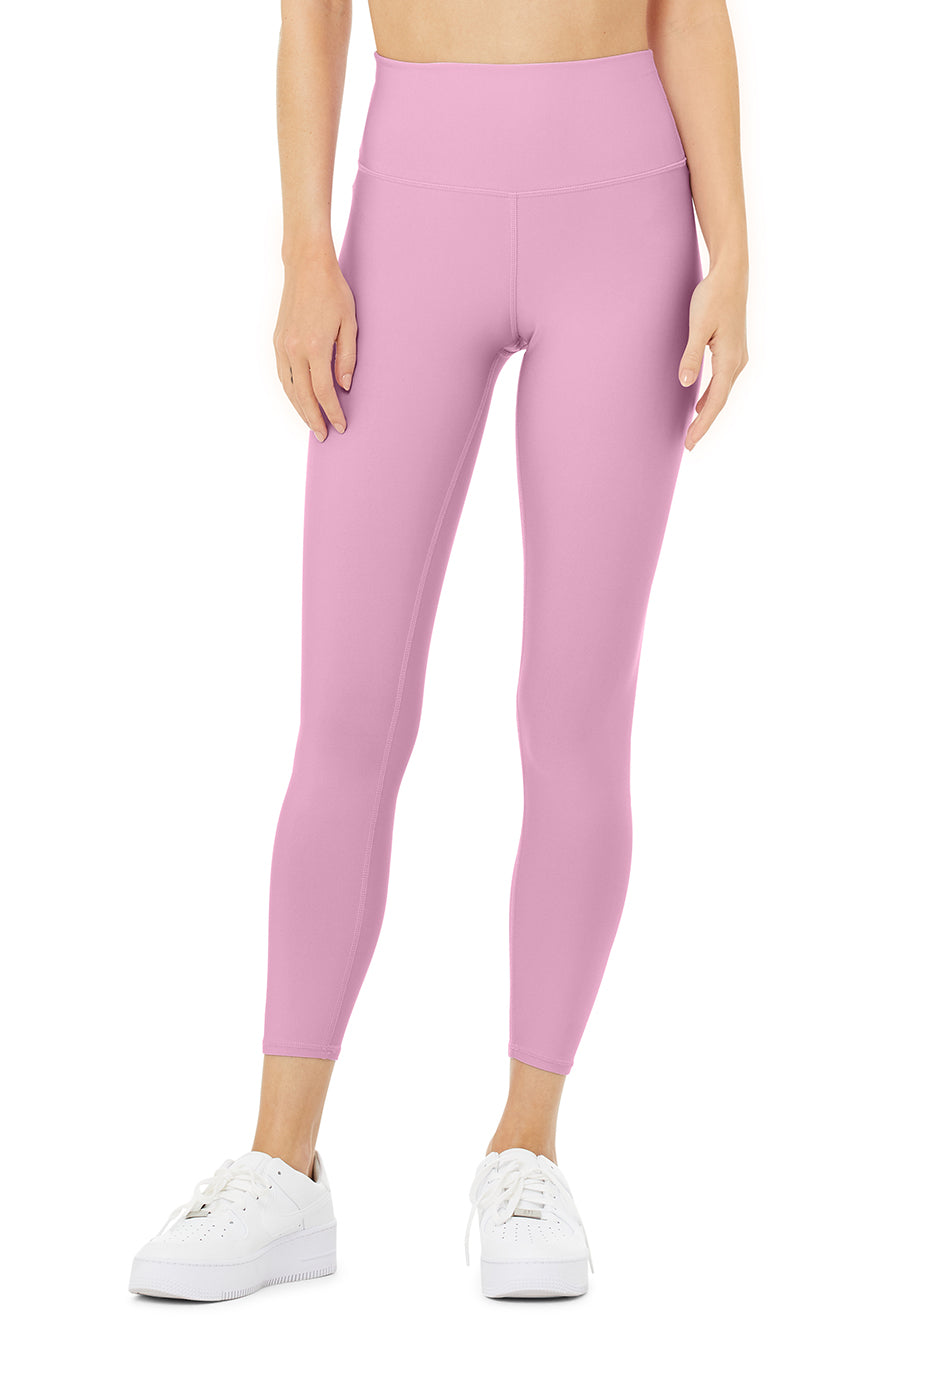 Buy Alo Yoga® Wellness Bra - Pink Lavender At 50% Off